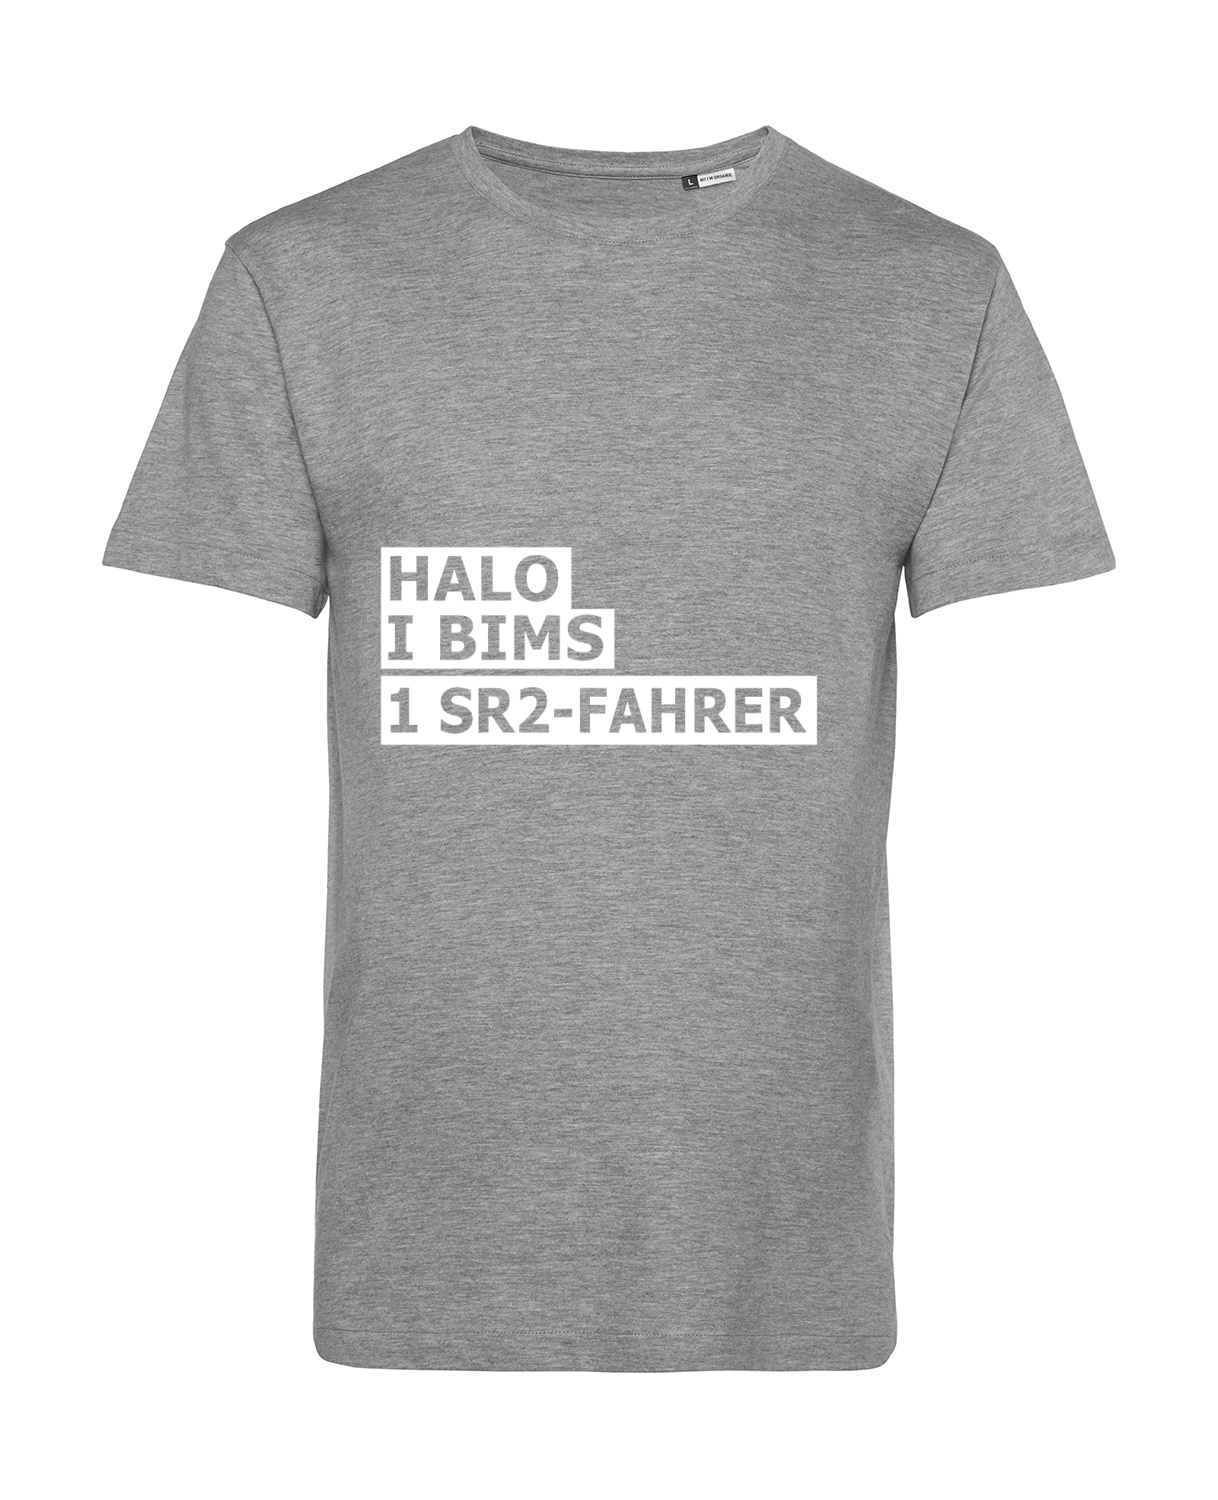 Nachhaltiges T-Shirt Herren 2Takter - Halo I bims 1 SR2-Fahrer